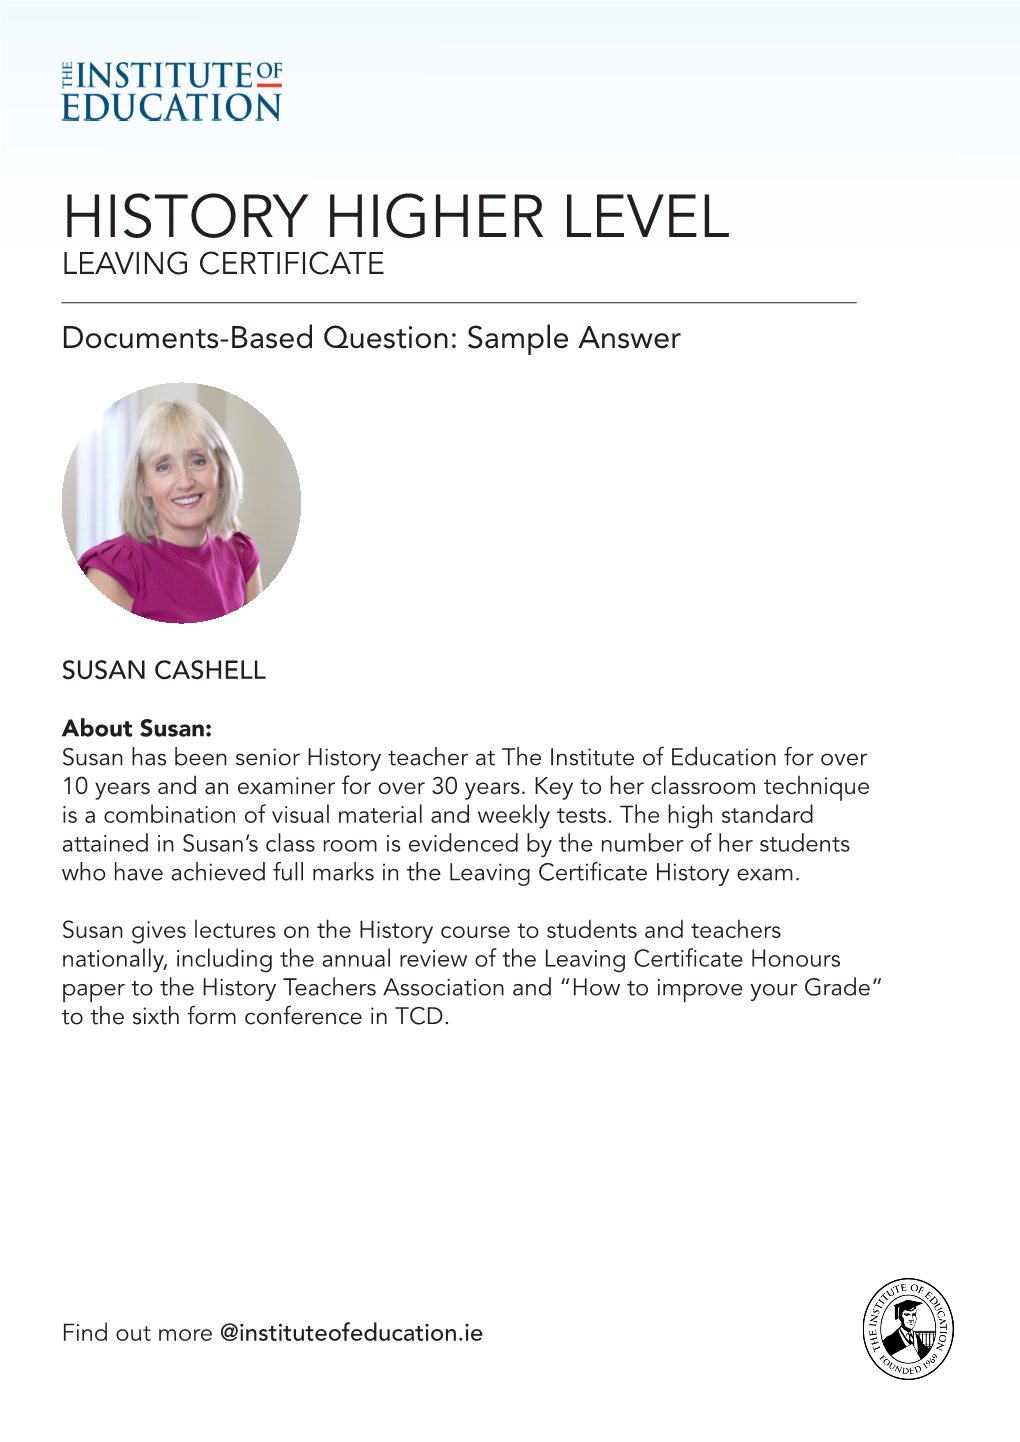 History Higher Level Leaving Certificate